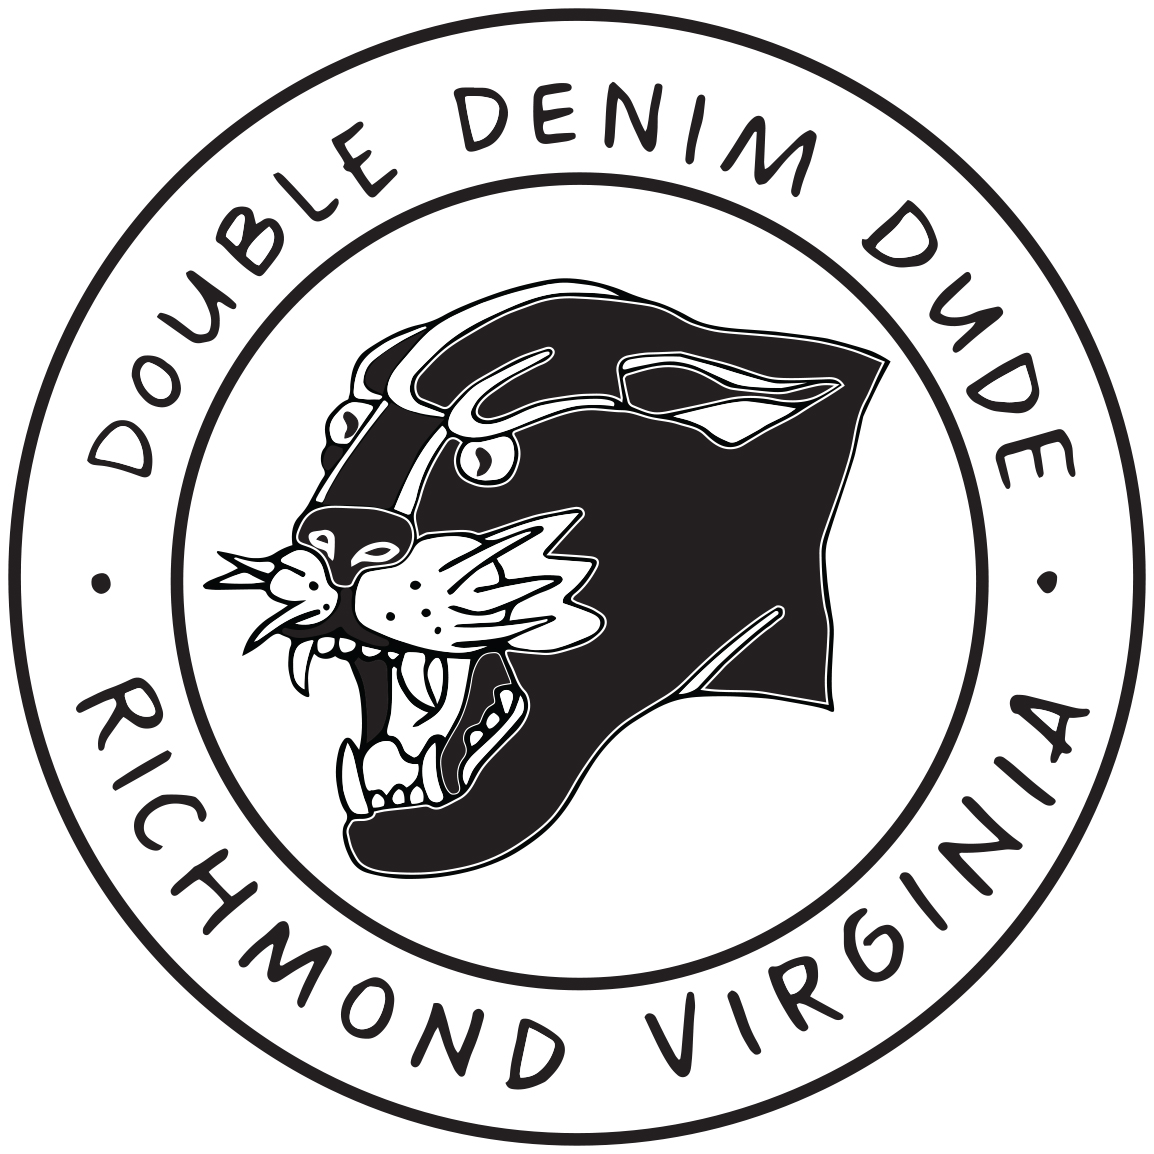 DDD panther logo copy.jpg